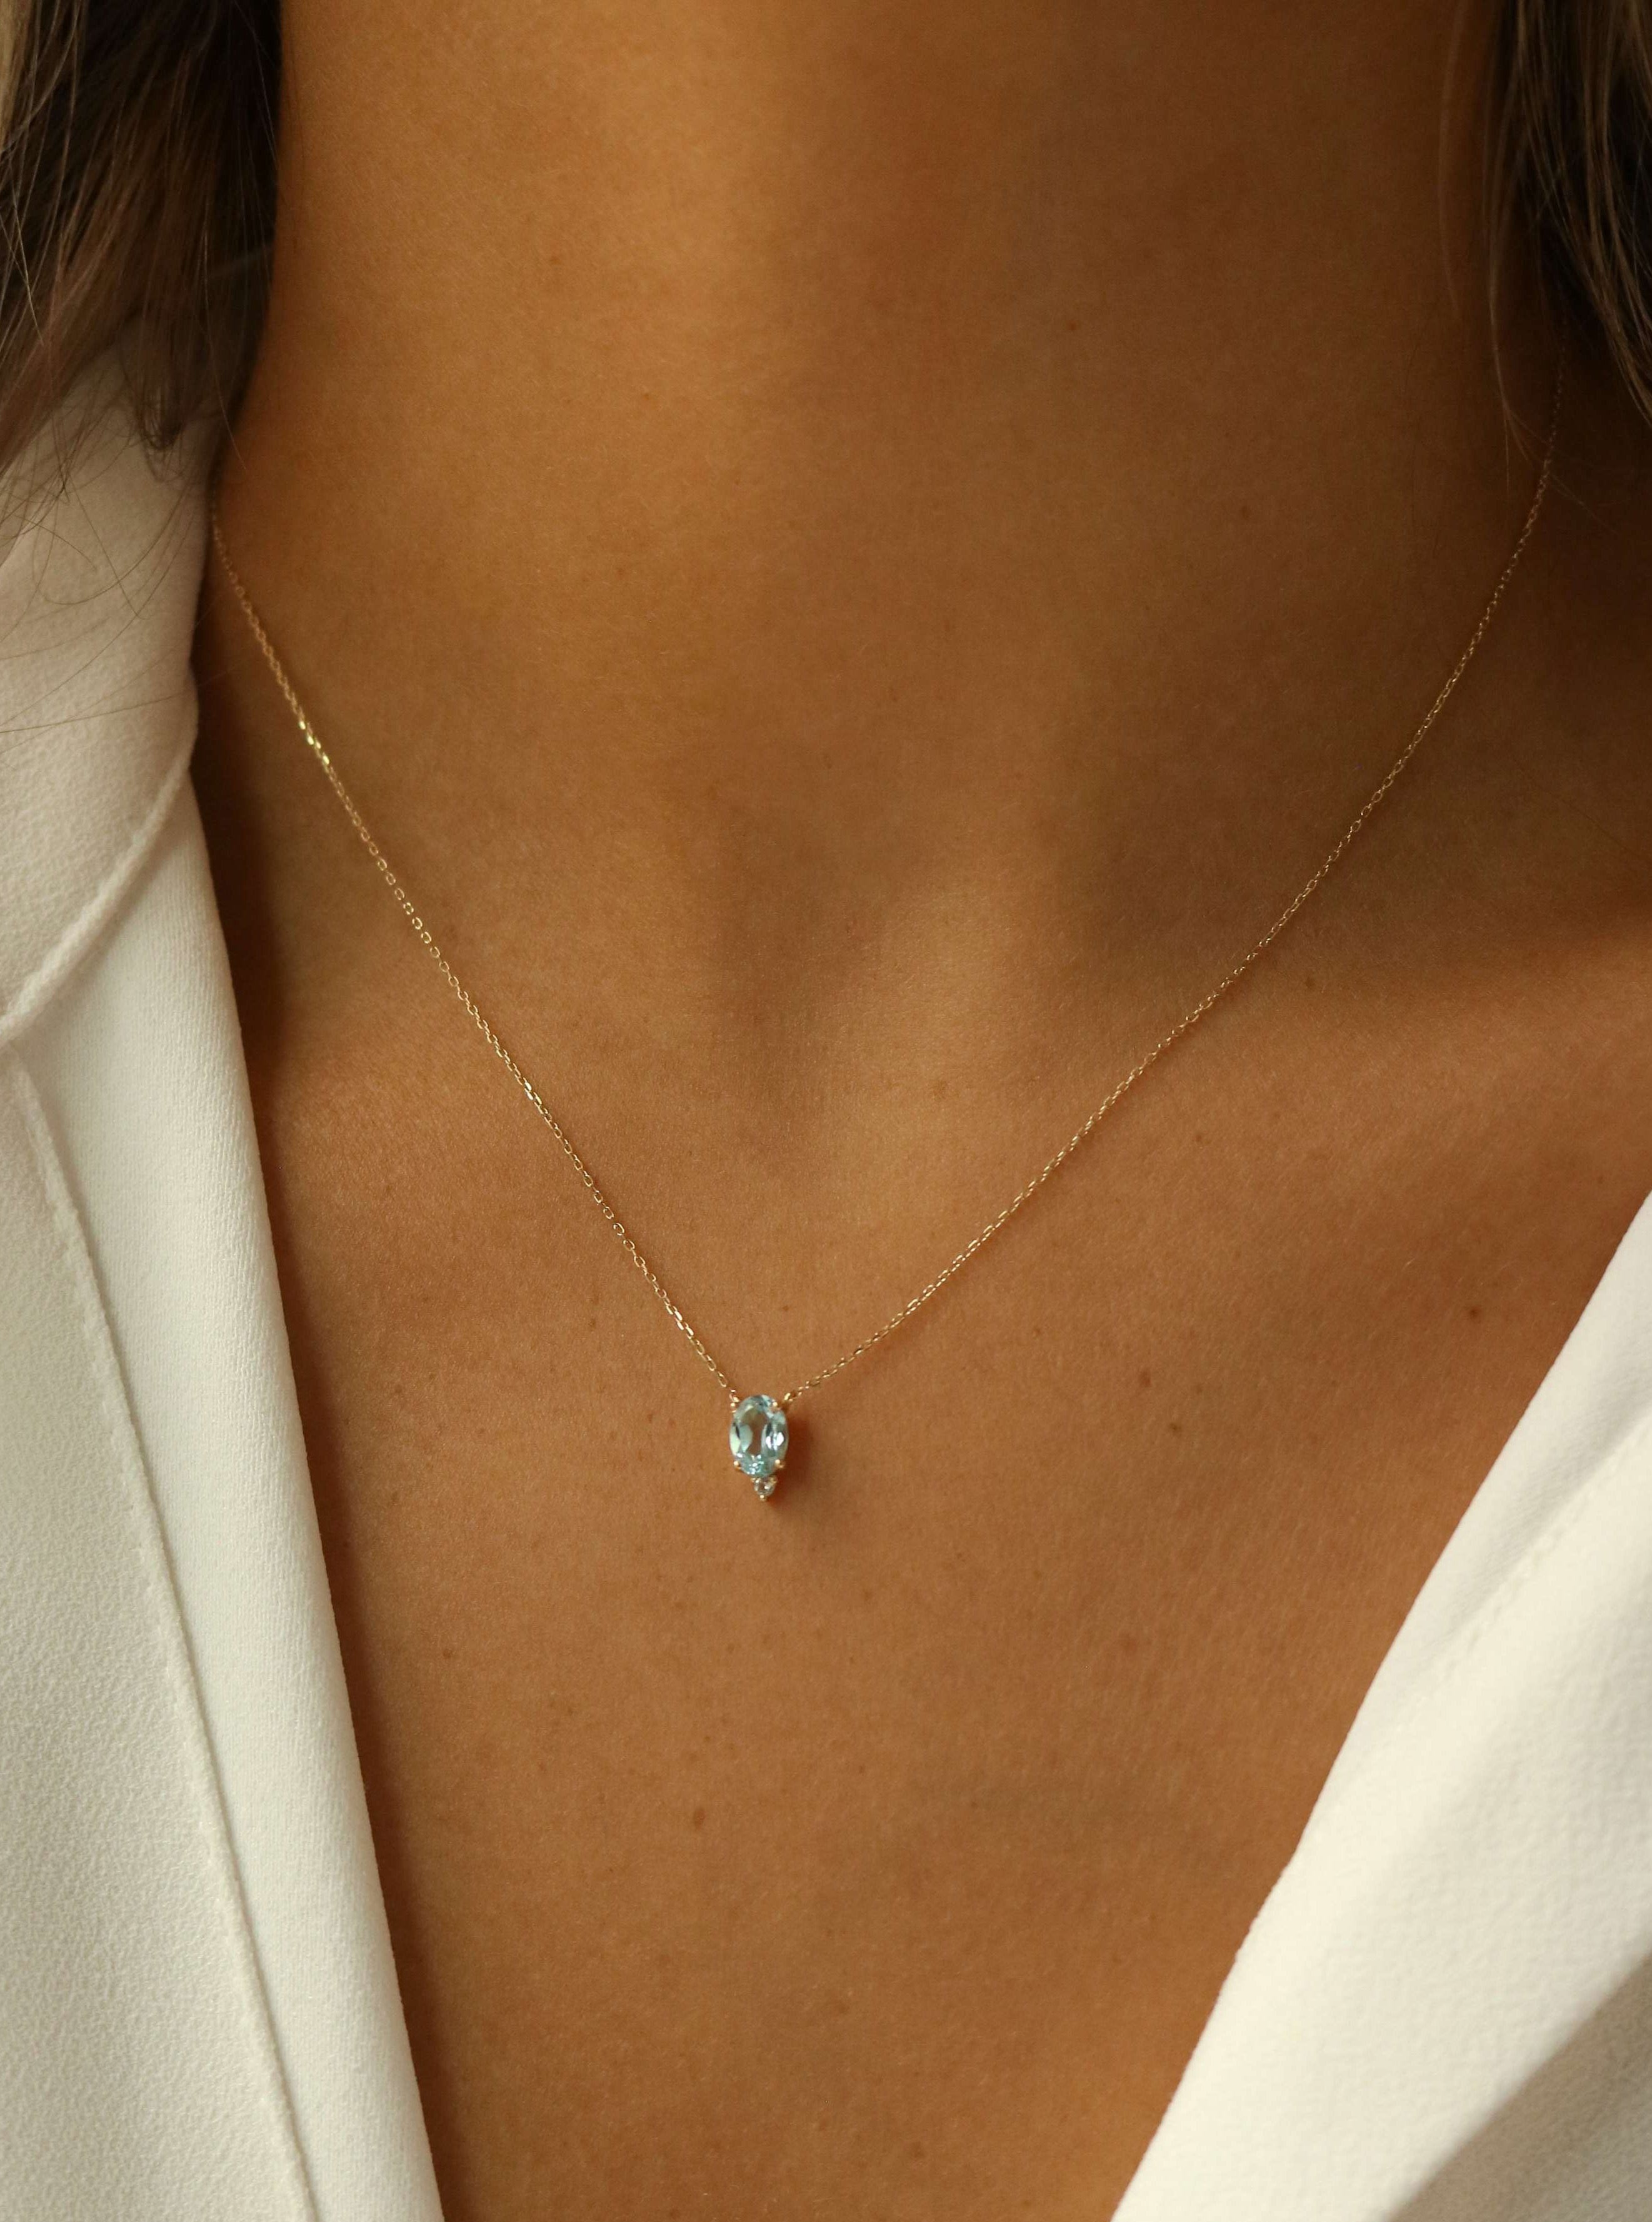 Gemstone Necklaces & Pendants | Gold Vermeil & Sterling Silver |  Manchester, UK Online Shop – Vianne Jewellery